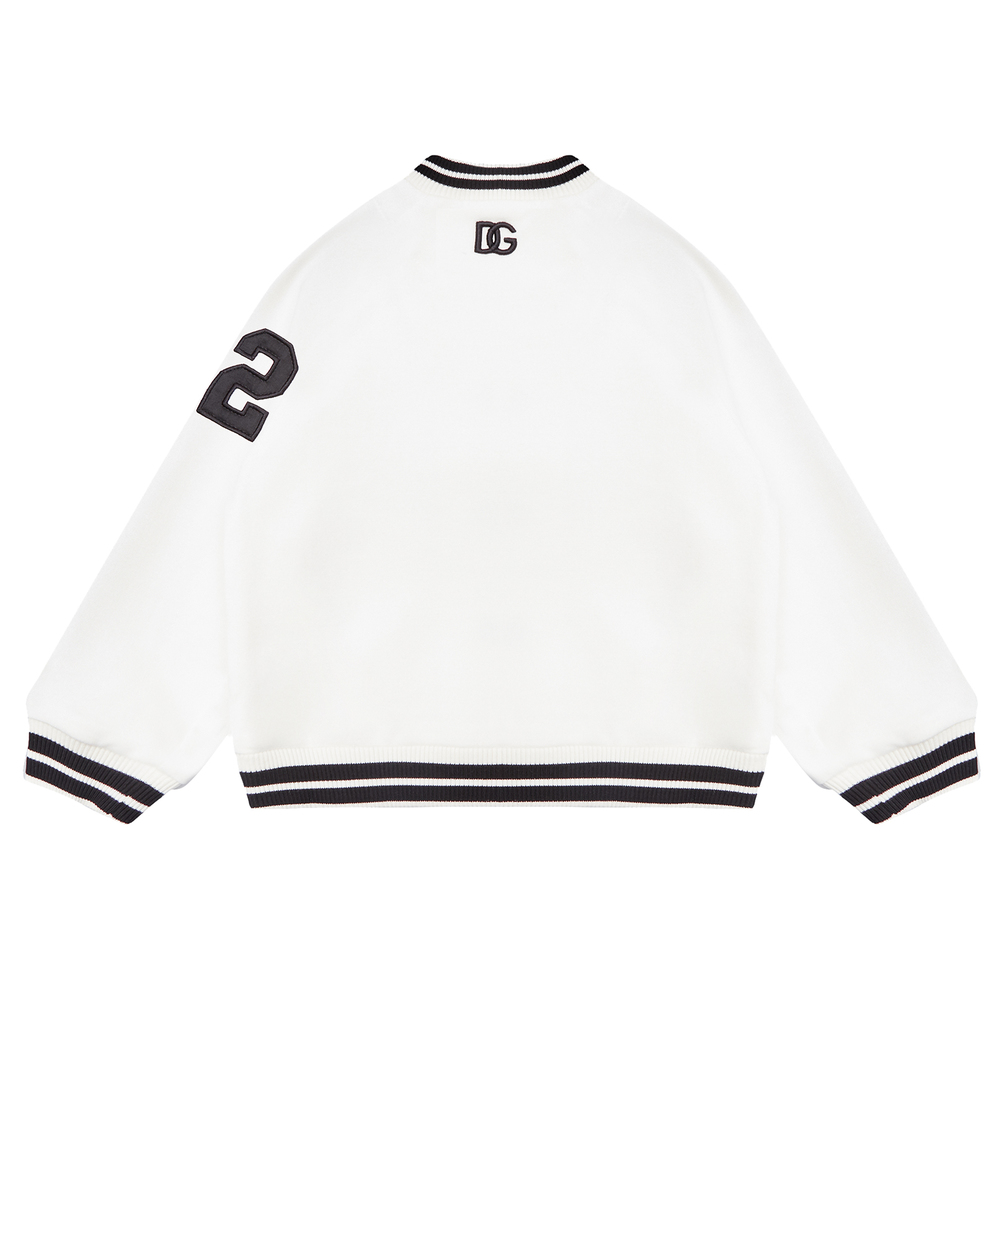 Бомбер Dolce&Gabbana Kids L1JWDK-G7B8G, белый цвет • Купить в интернет-магазине Kameron